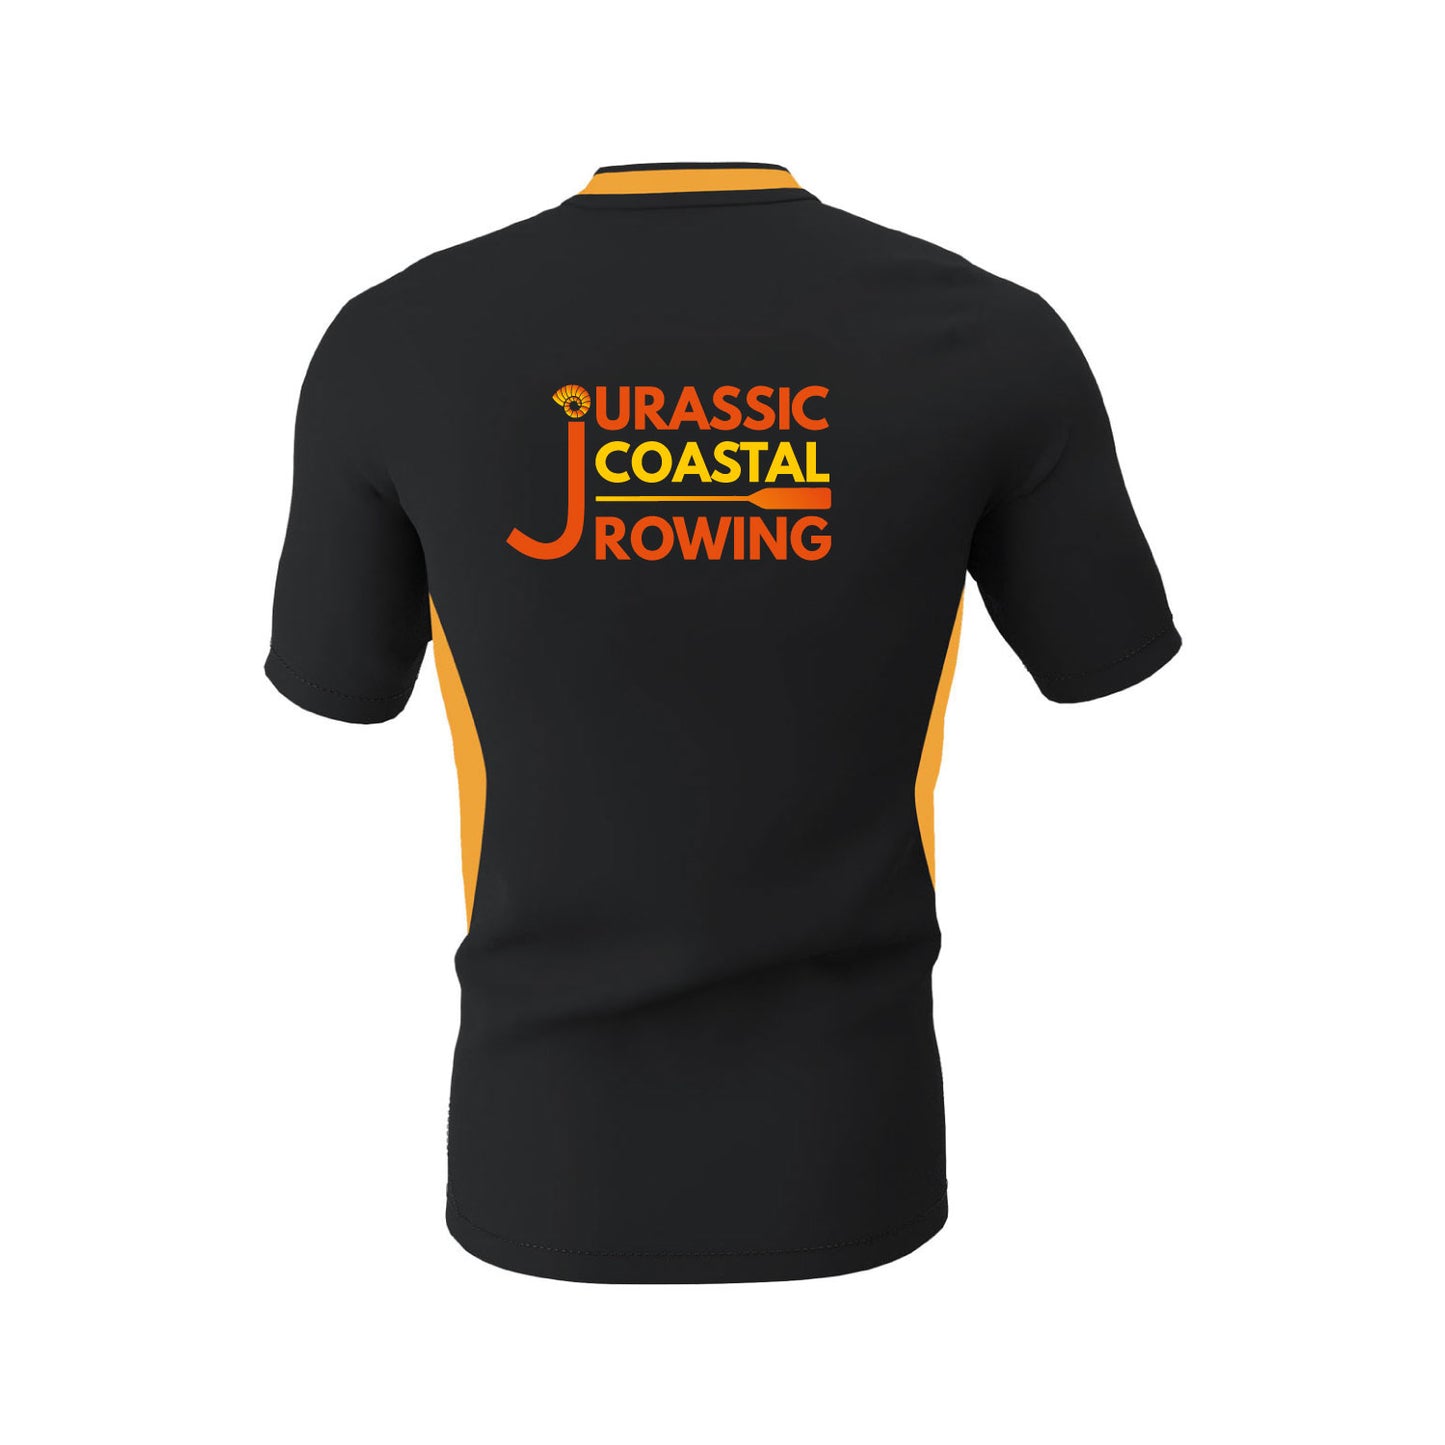 Jurassic Coastal Rowing Exmouth Contrast T Shirt